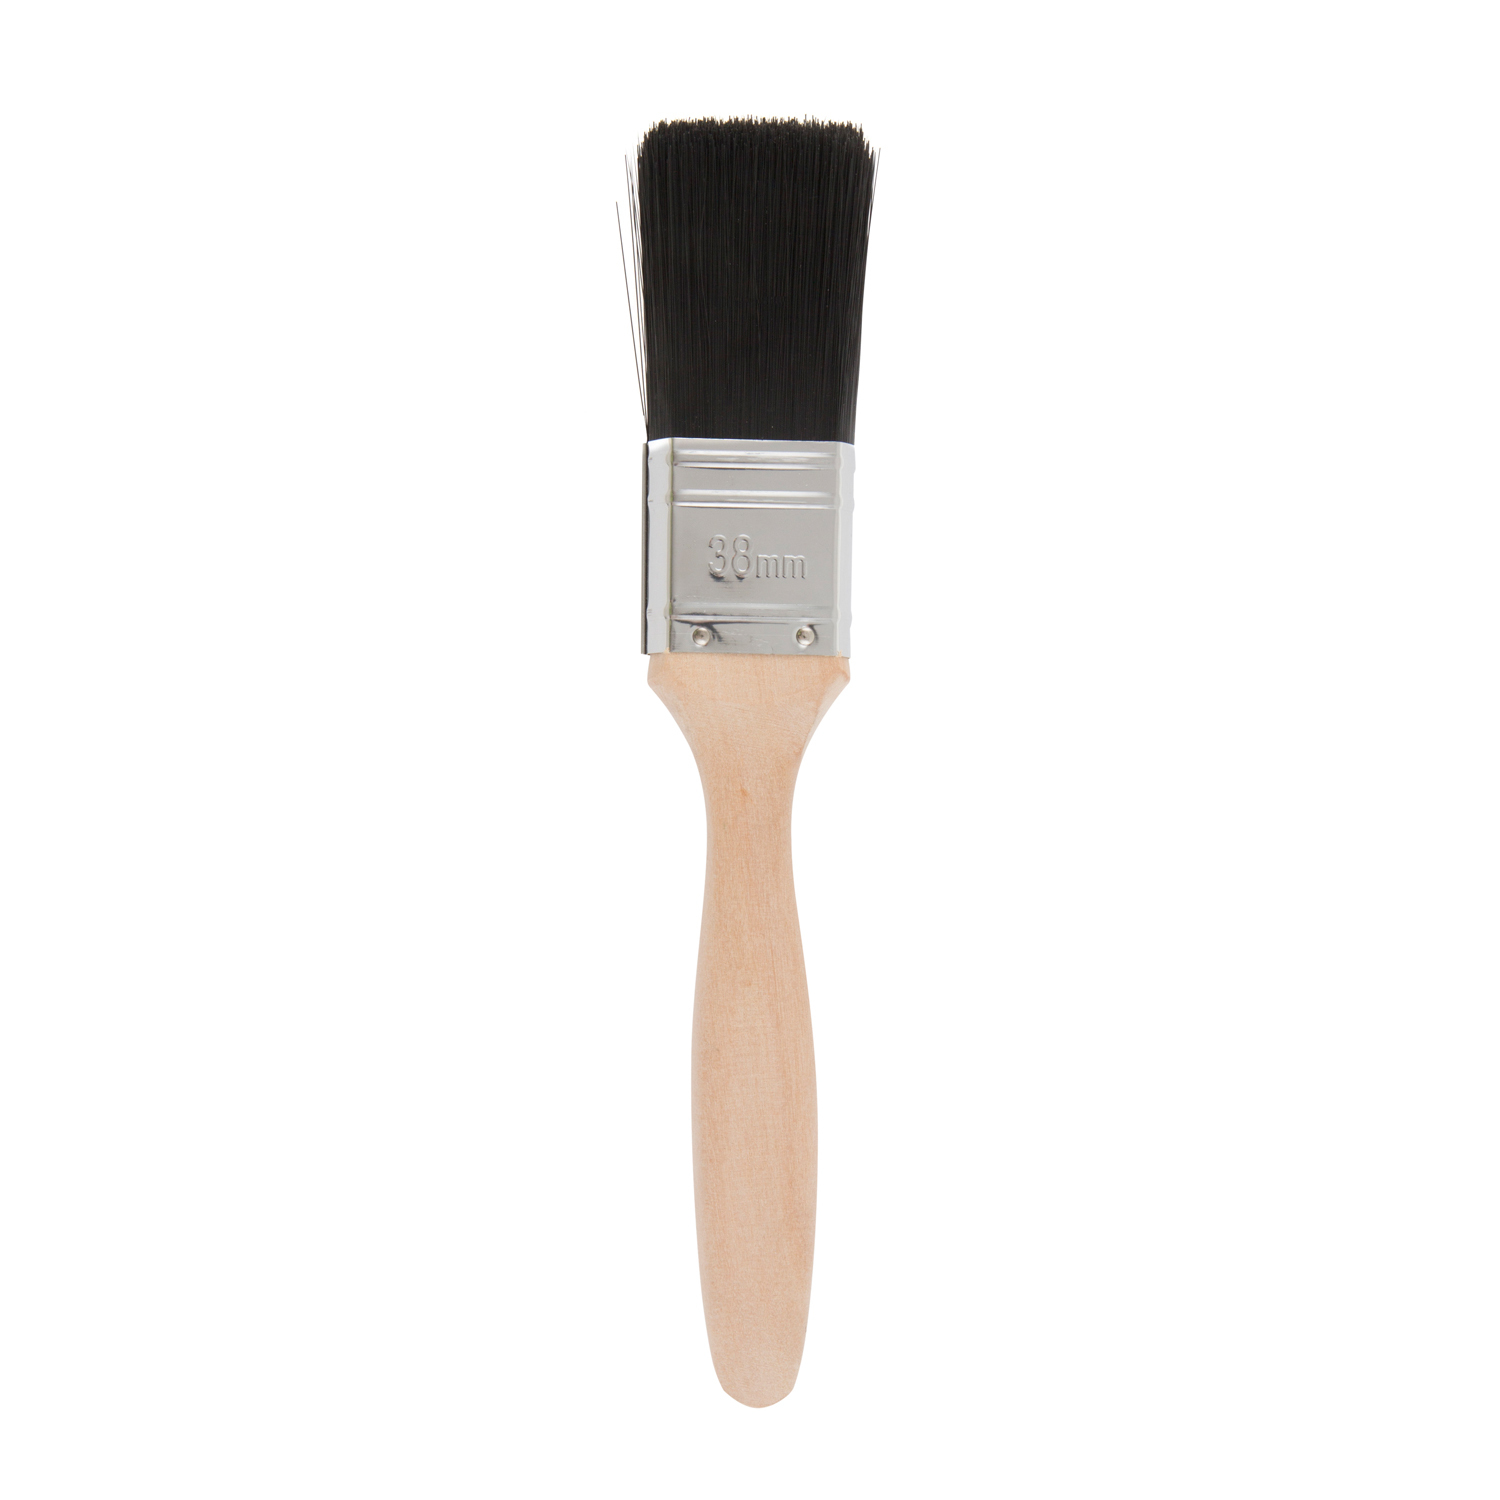 Prepare It 1.5 inch Professional Paint Brush Image 2